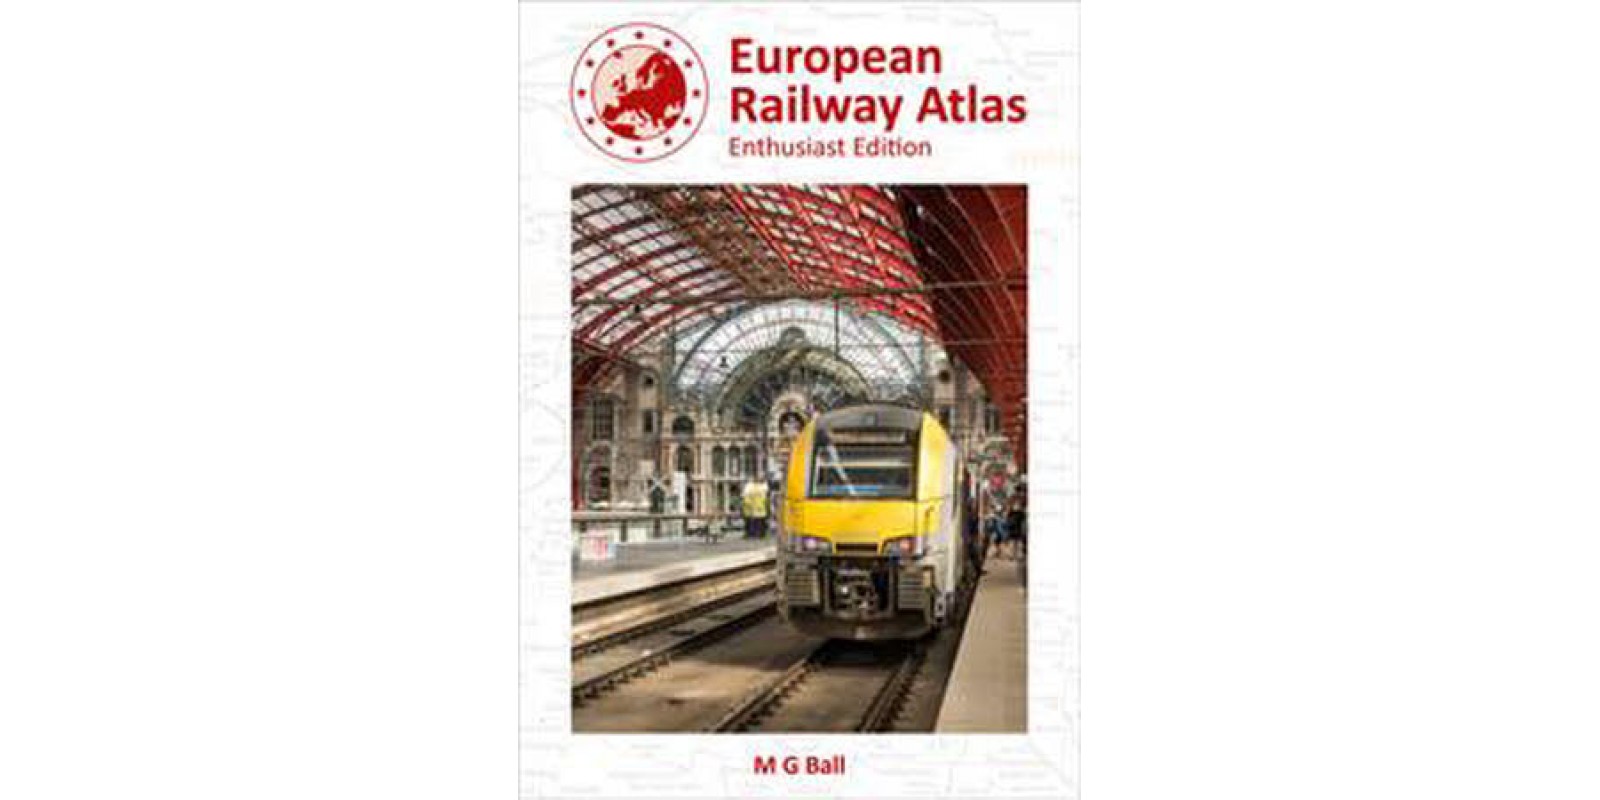 BOOK_004 European Railway Atlas (enthusiast edition) 